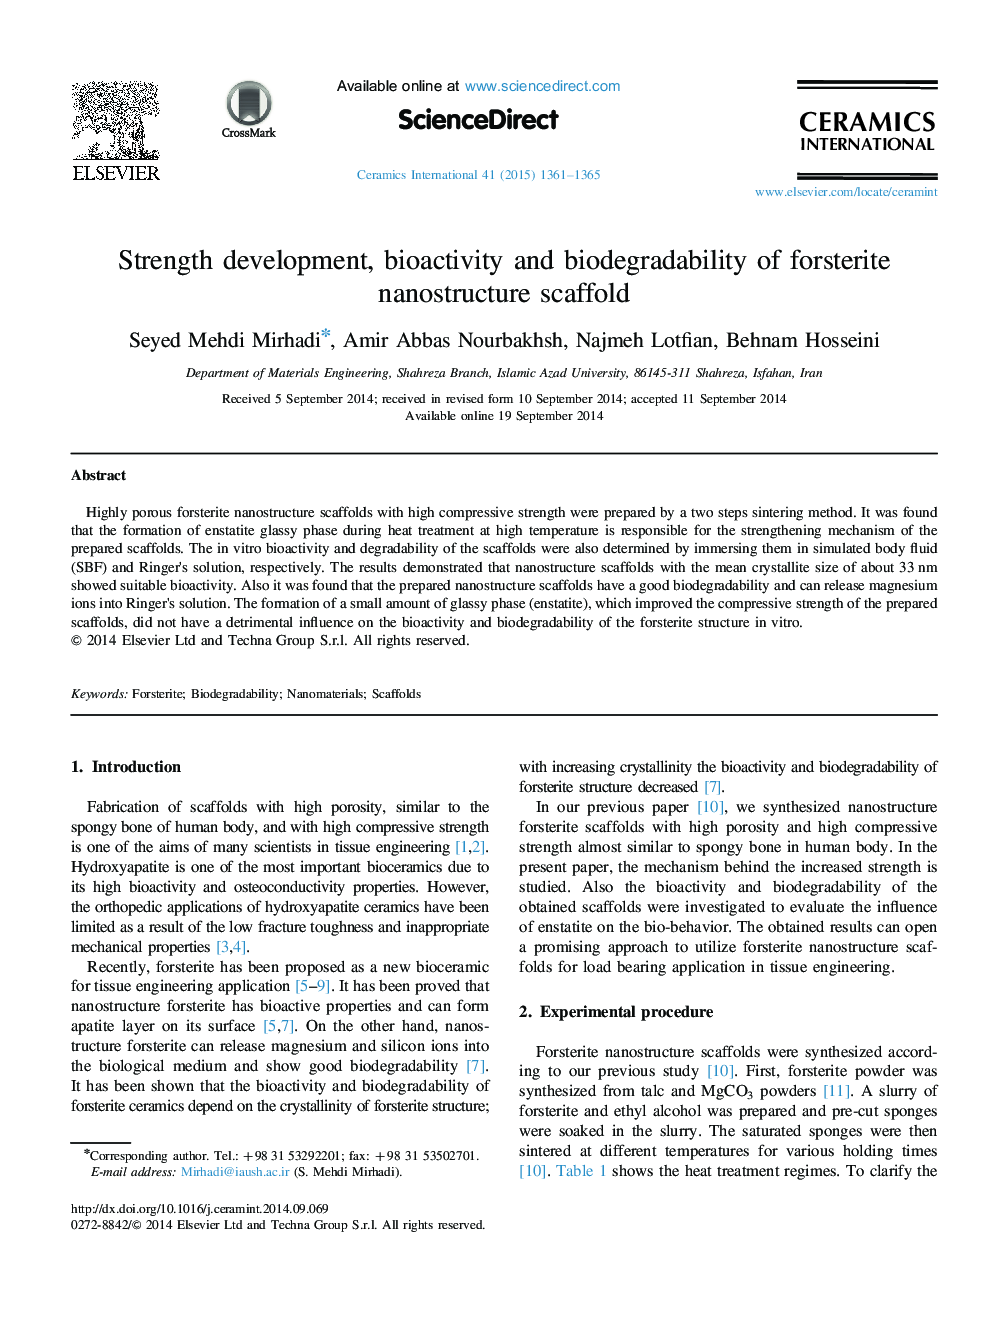 Strength development, bioactivity and biodegradability of forsterite nanostructure scaffold